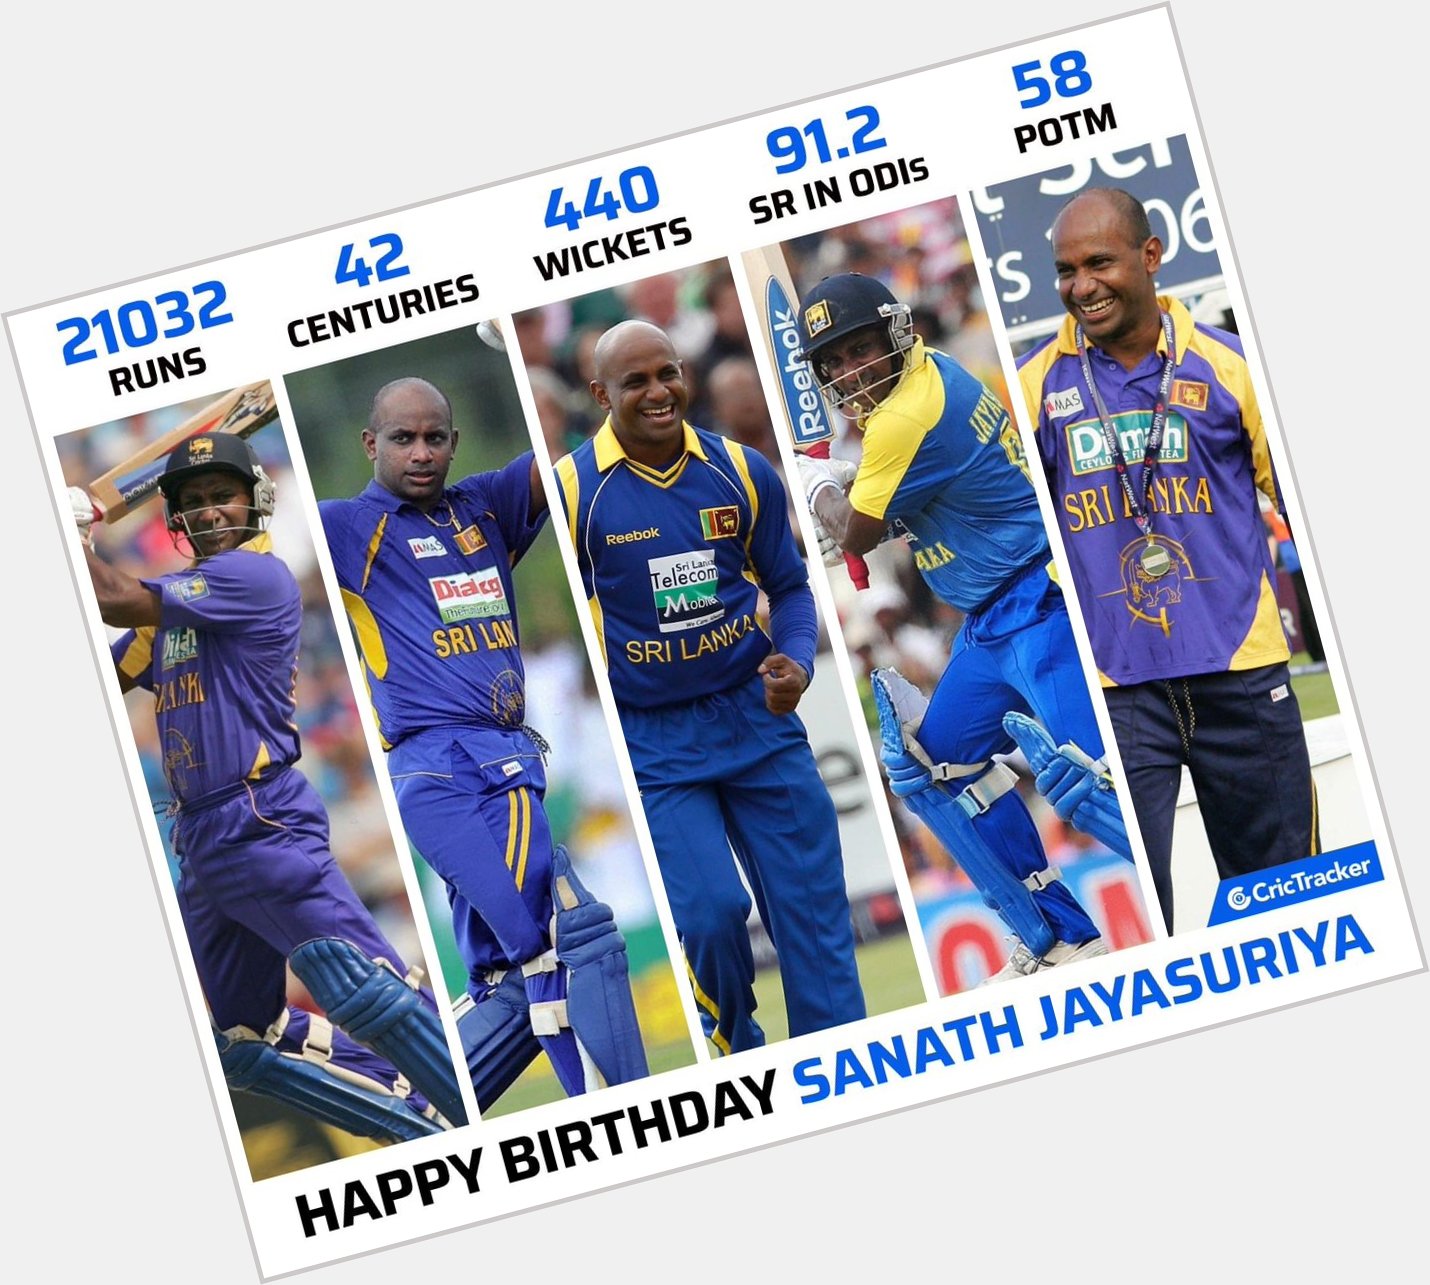 One of the most aggressive openers Sanath jayasuriya turns one year older, wishing him a very happy birthday. 